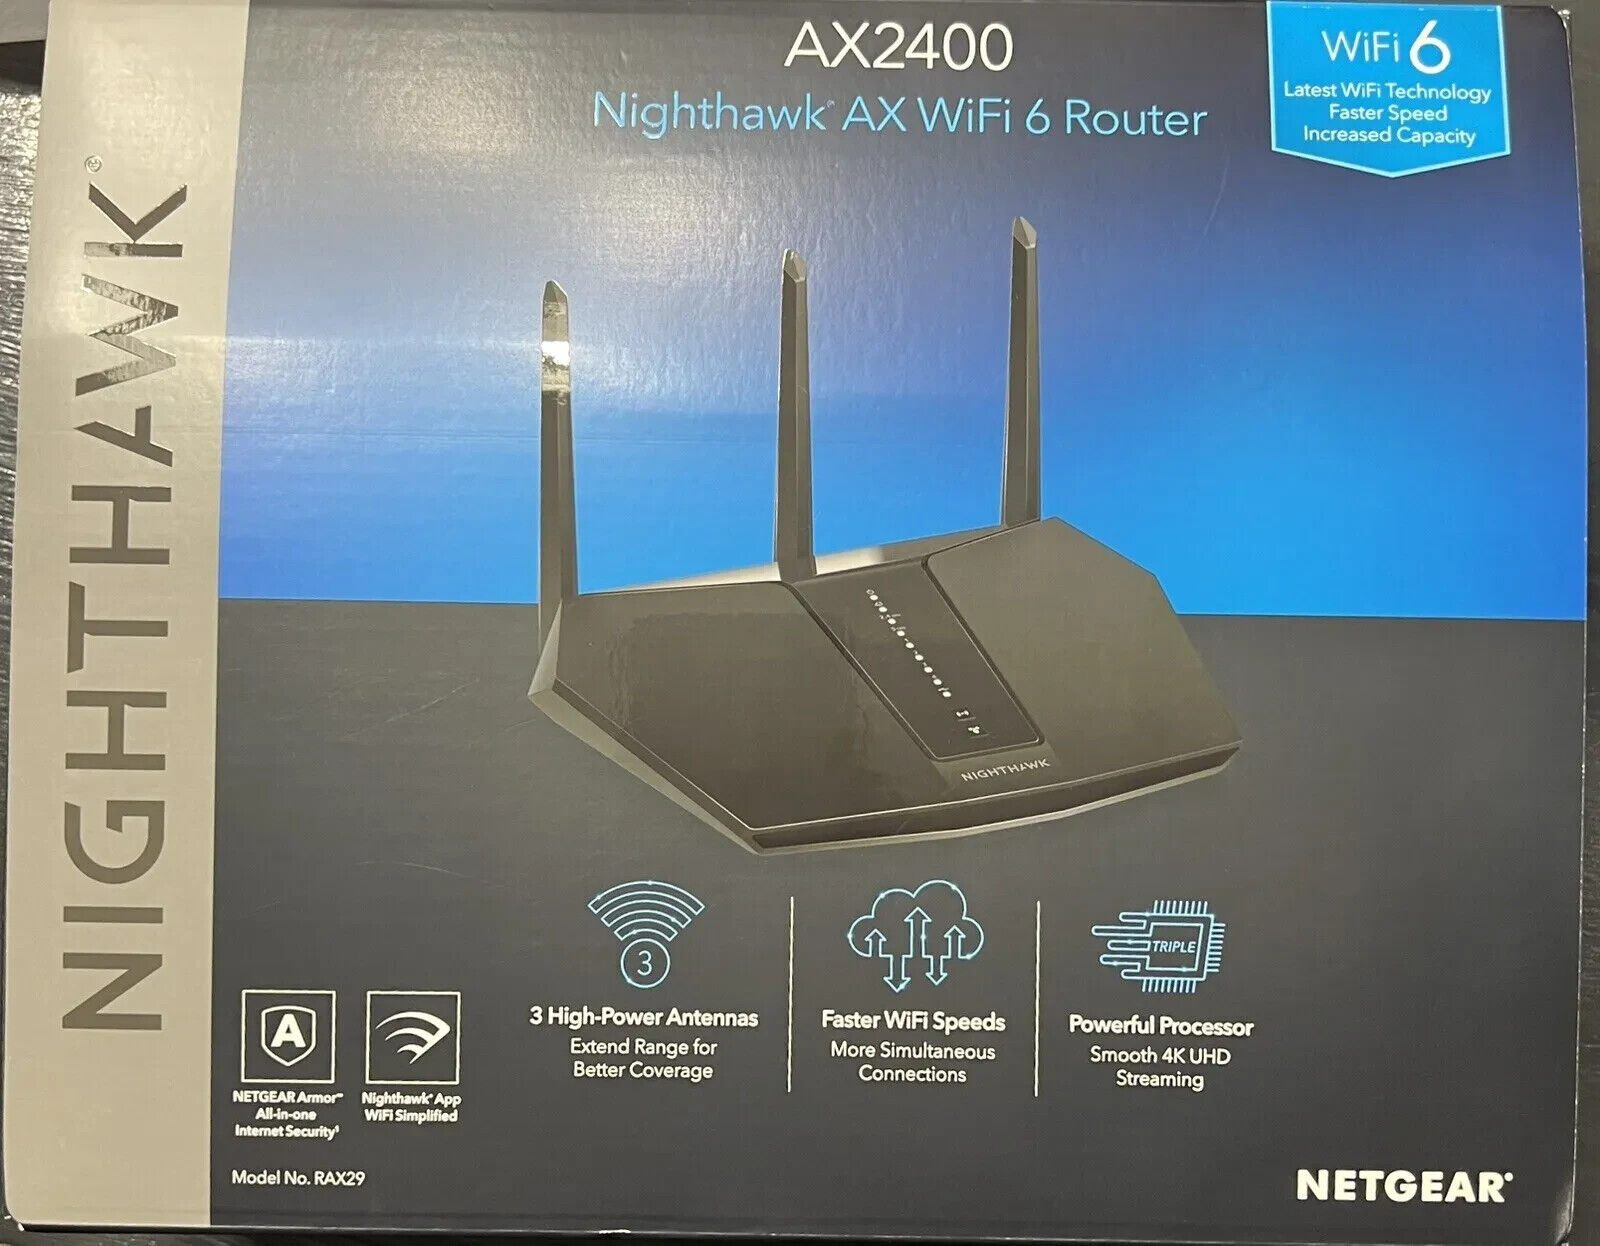 Netgear RAX29-100NAS Nighthawk AX2400 WiFi 6 Router OPEN BOX NEW. NEVER USED